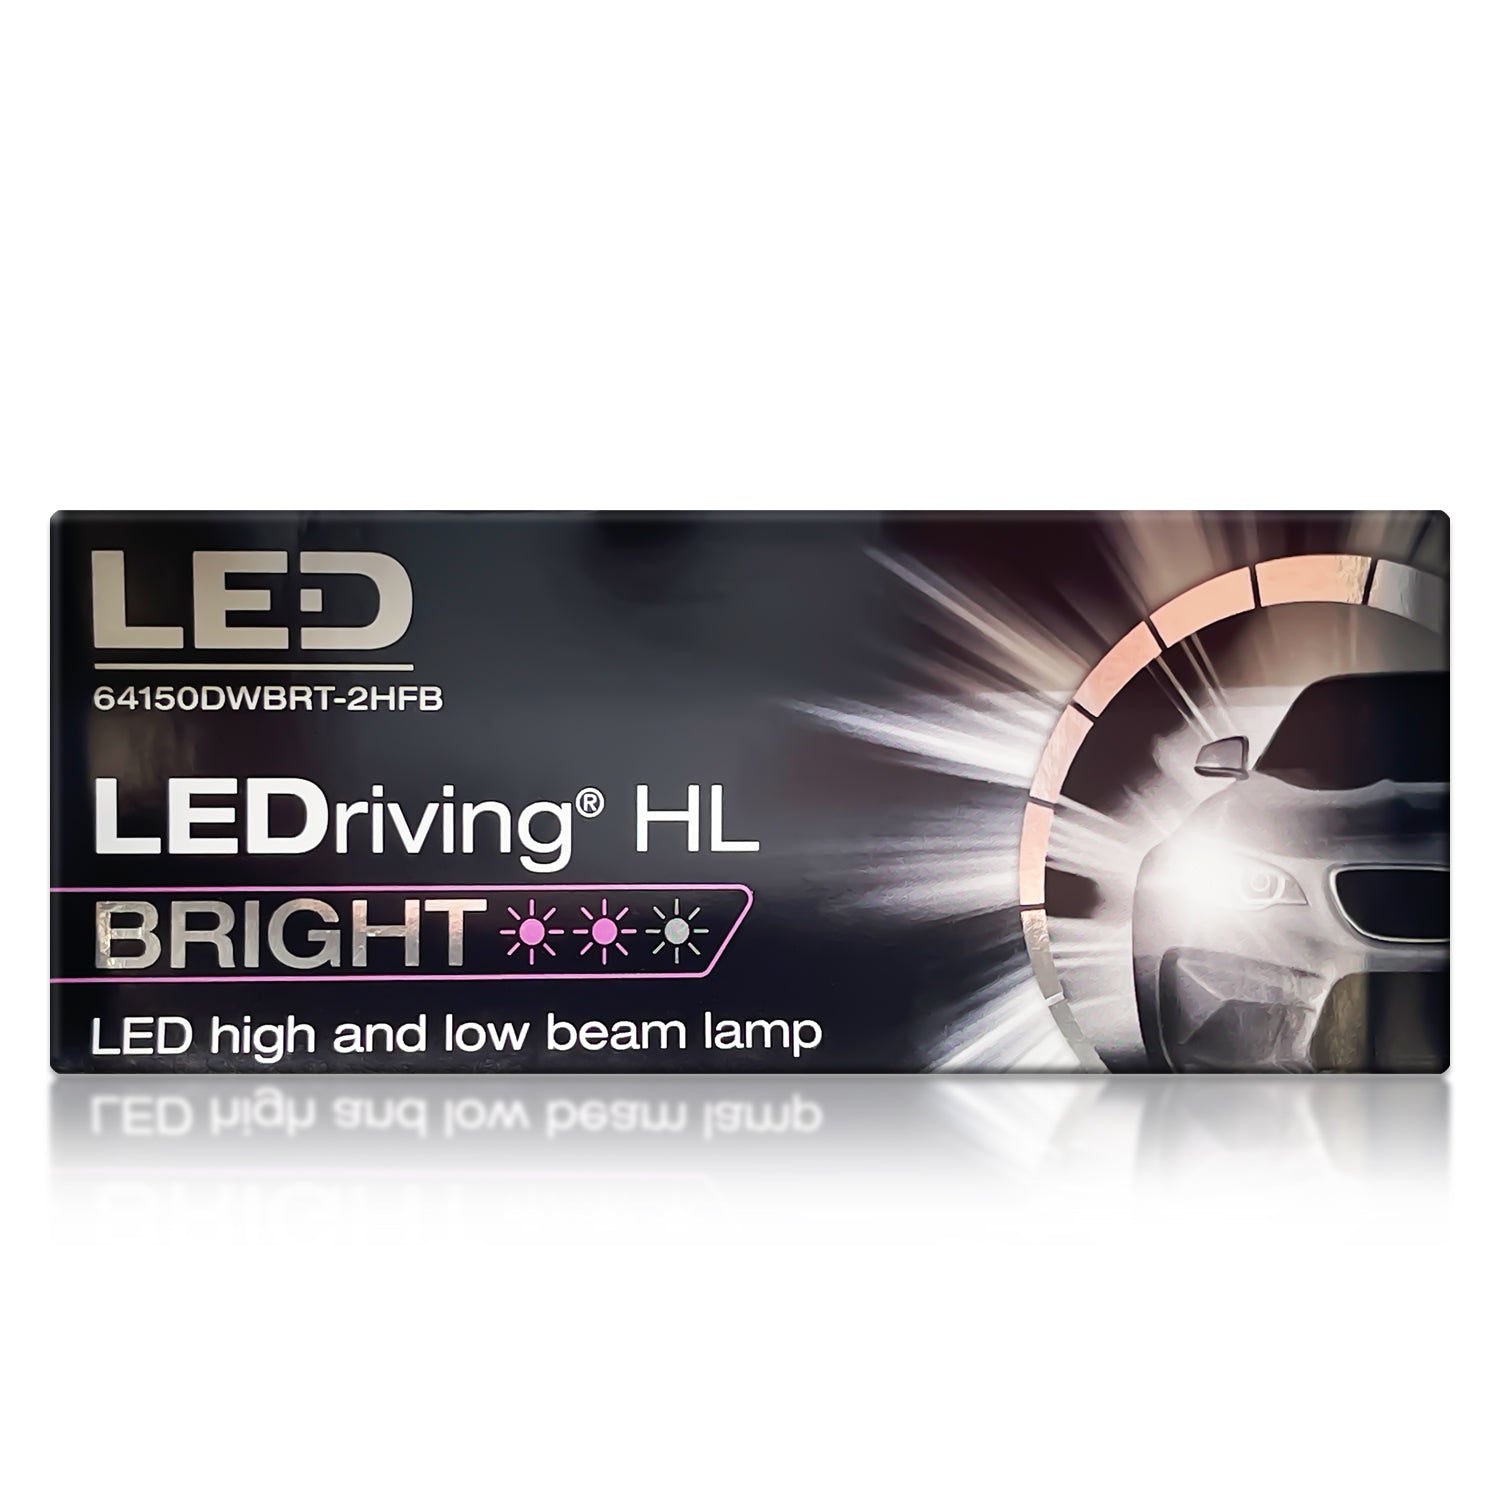 LEDriving HLT BRIGHT H1